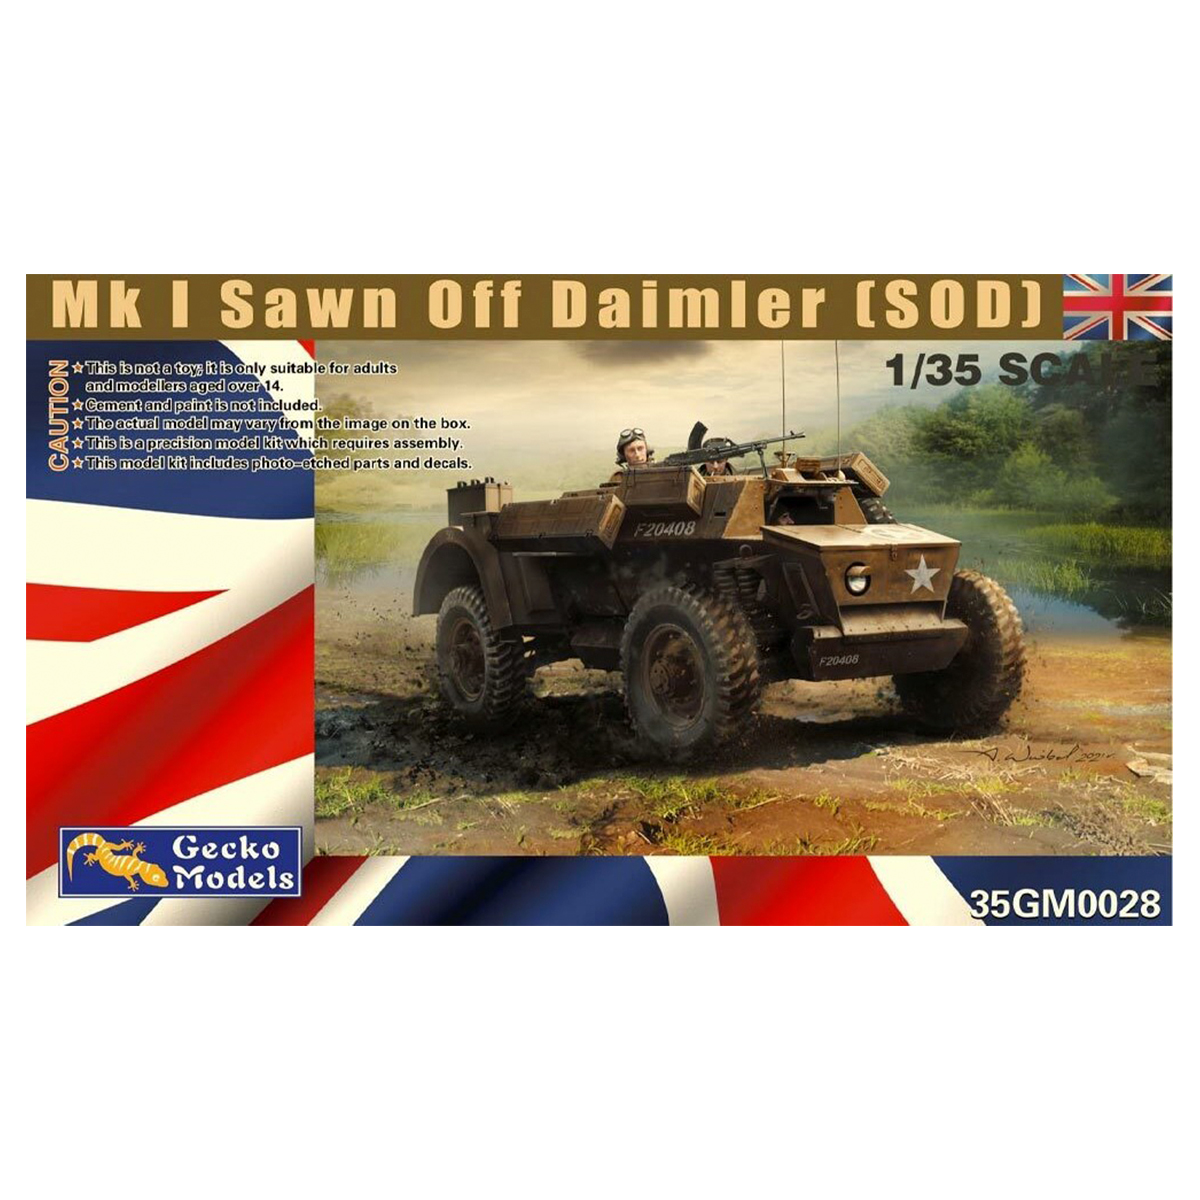 1/35 Mk I Sawn Off Daimler (SOD)